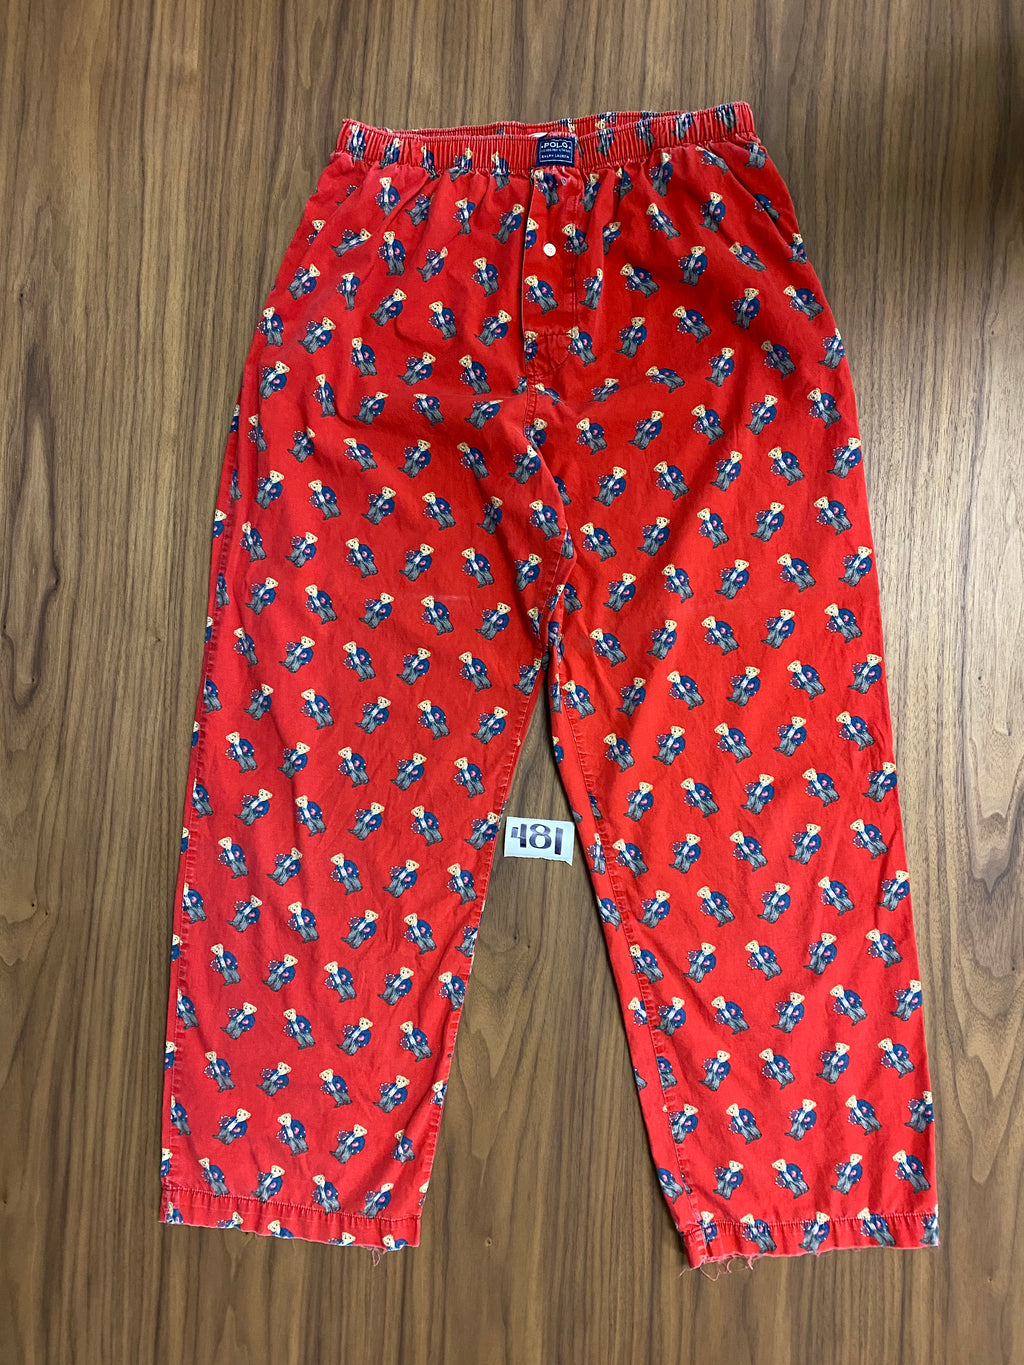 Polo Ralph Lauren Pajama Pants Red w/ Polo Bears - Red